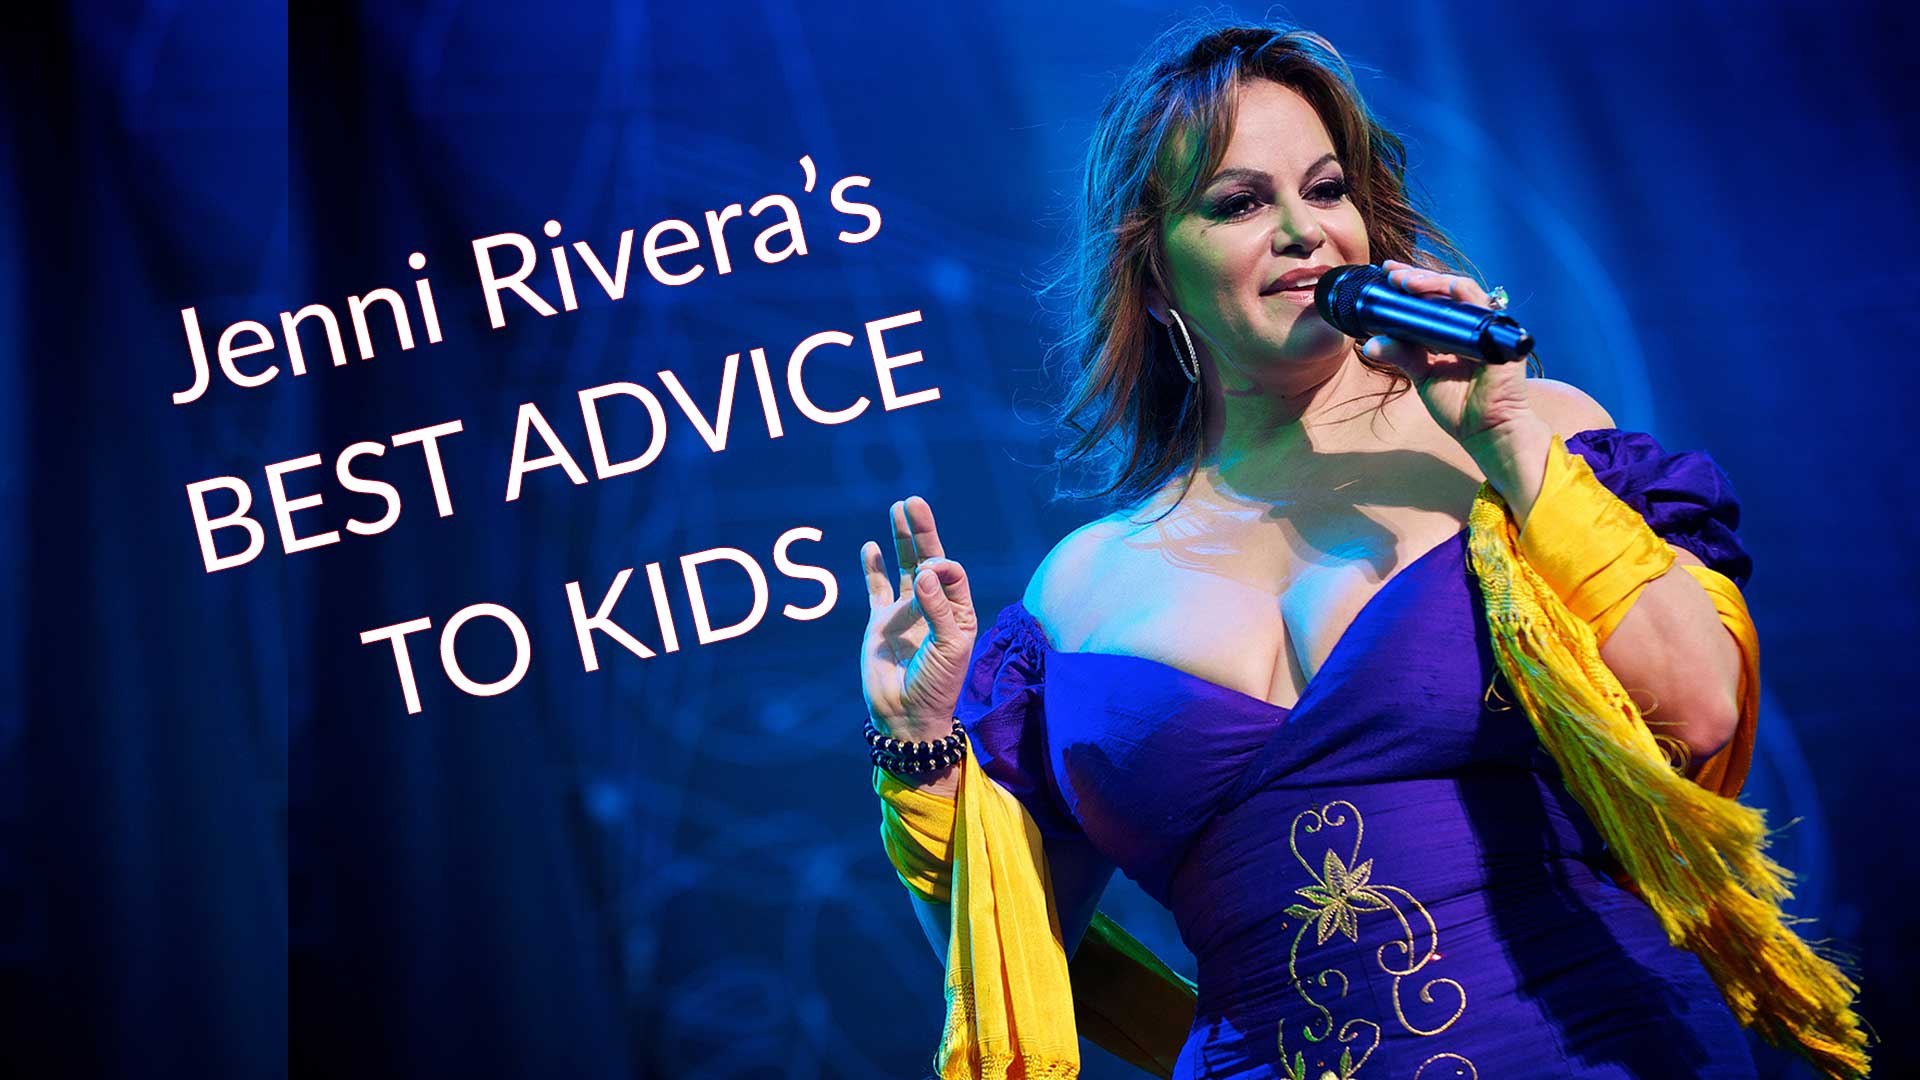 Mexican American singer Jenni Rivera best advice